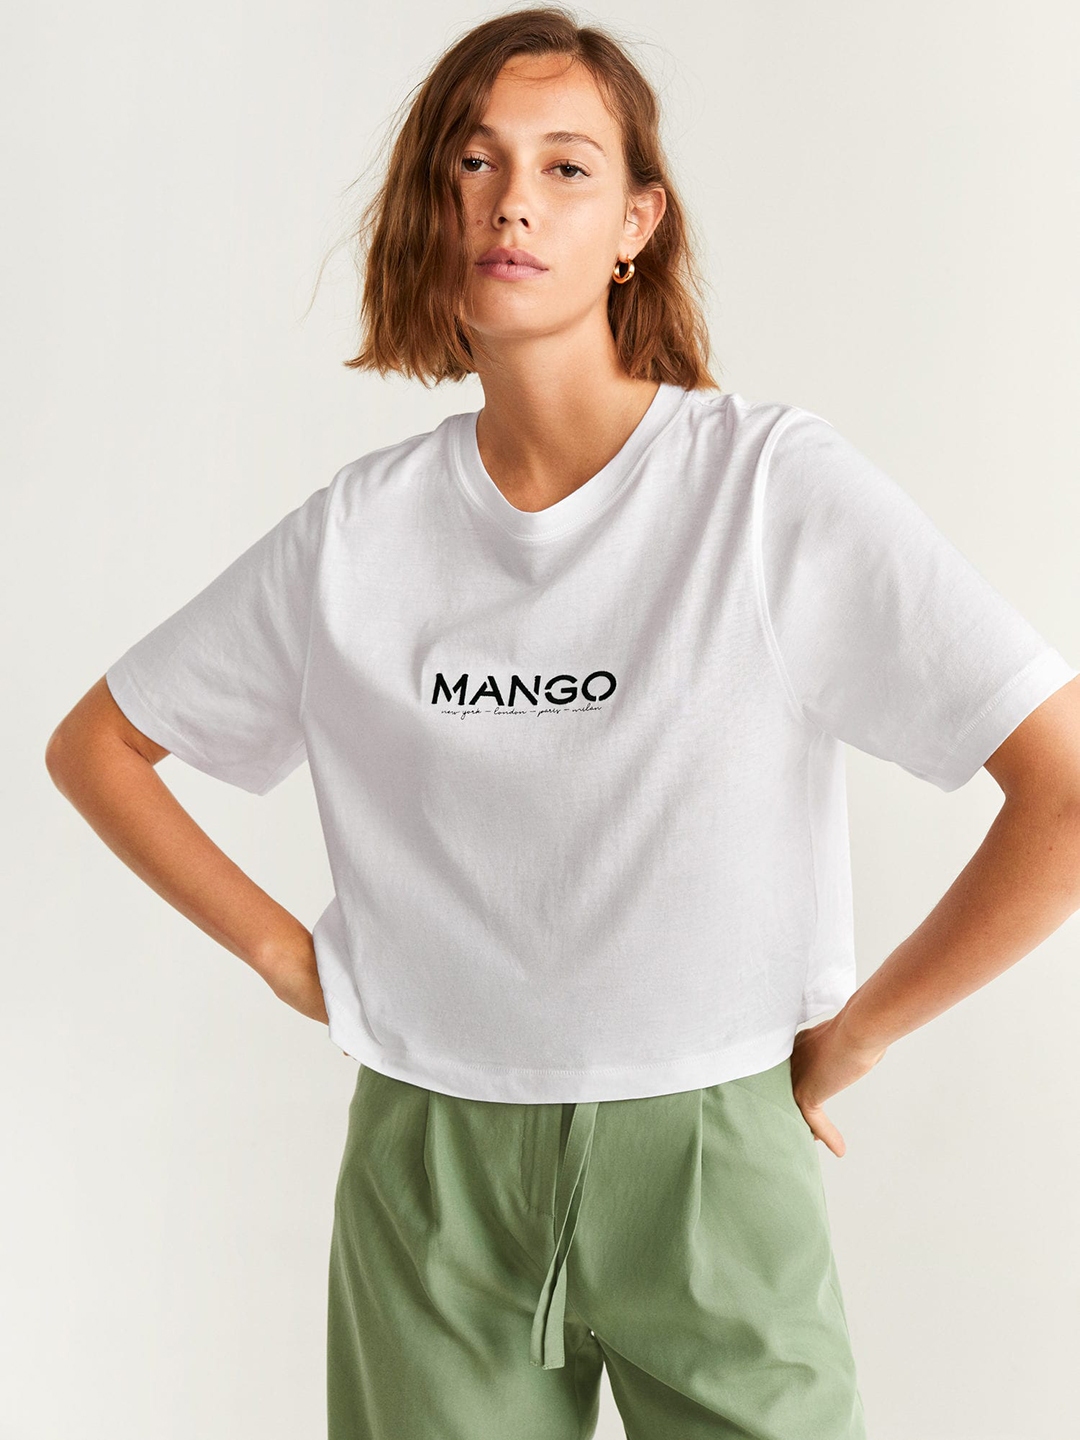 Buy Mango Women White Solid Round Neck T Shirt Tshirts For Women 10351551 Myntra 0899